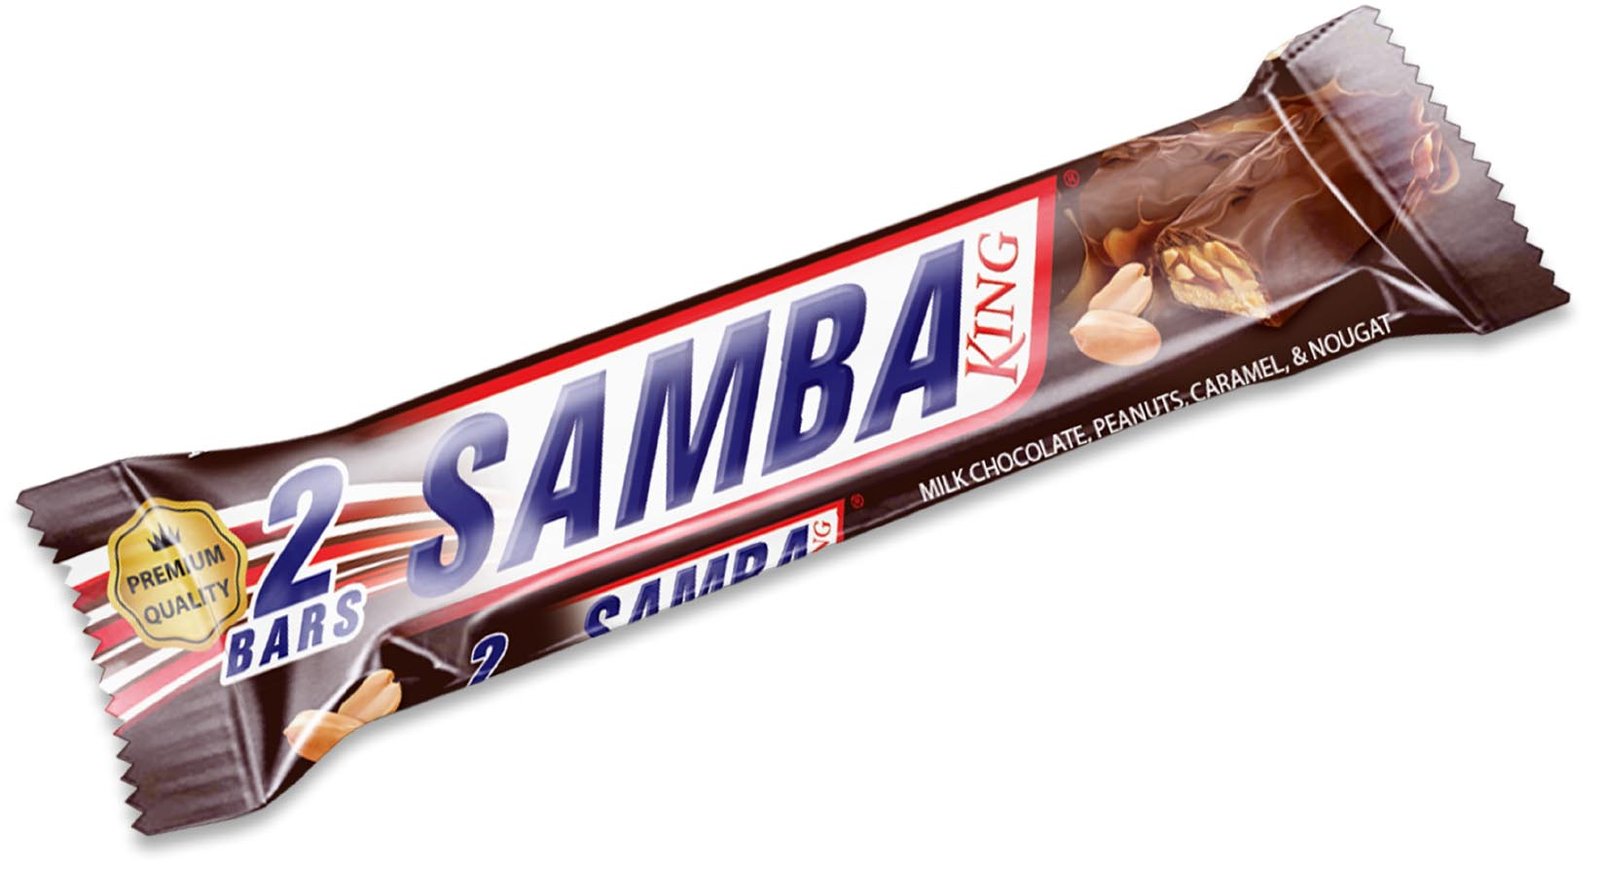 Samba milk chocolate with peanuts, caramel, & nougat